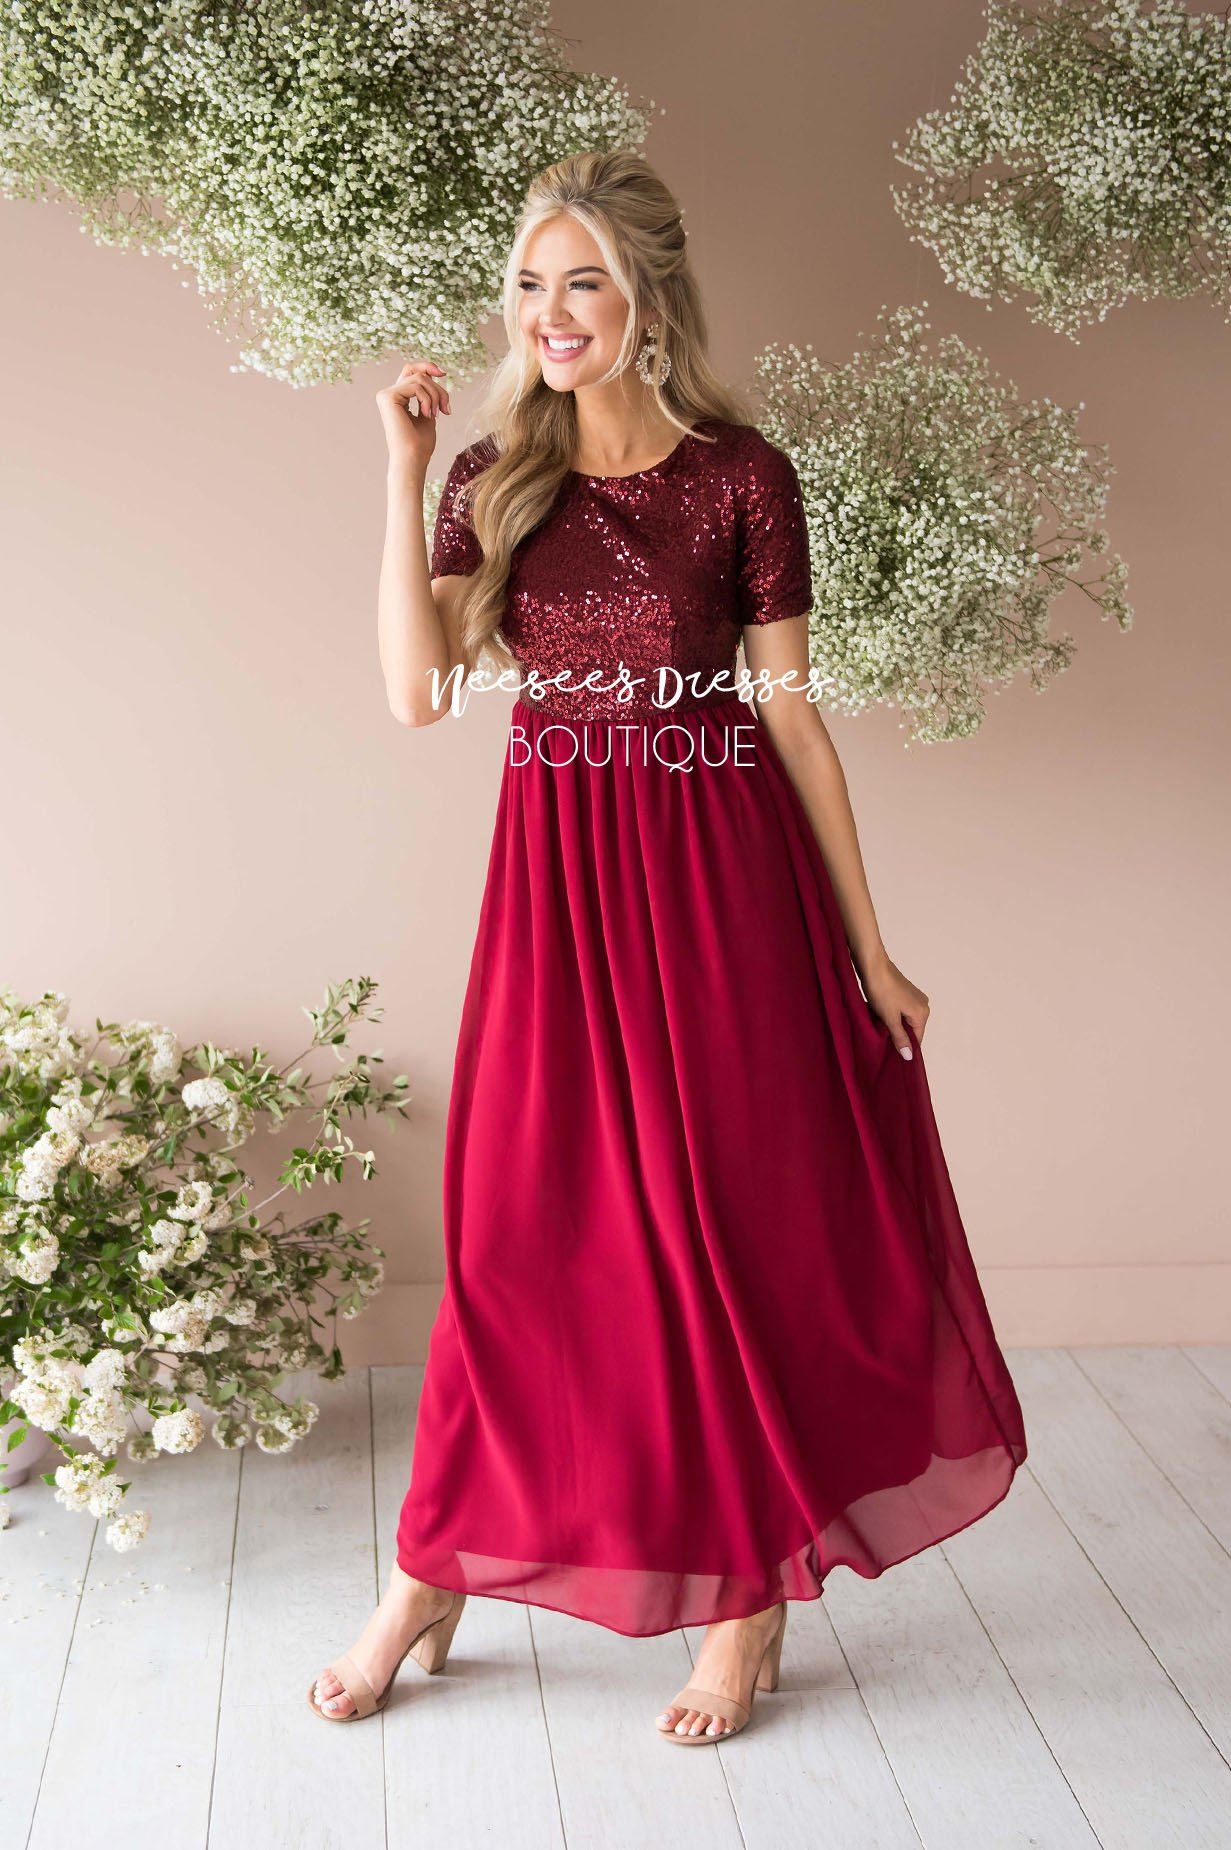 maroon modest dress